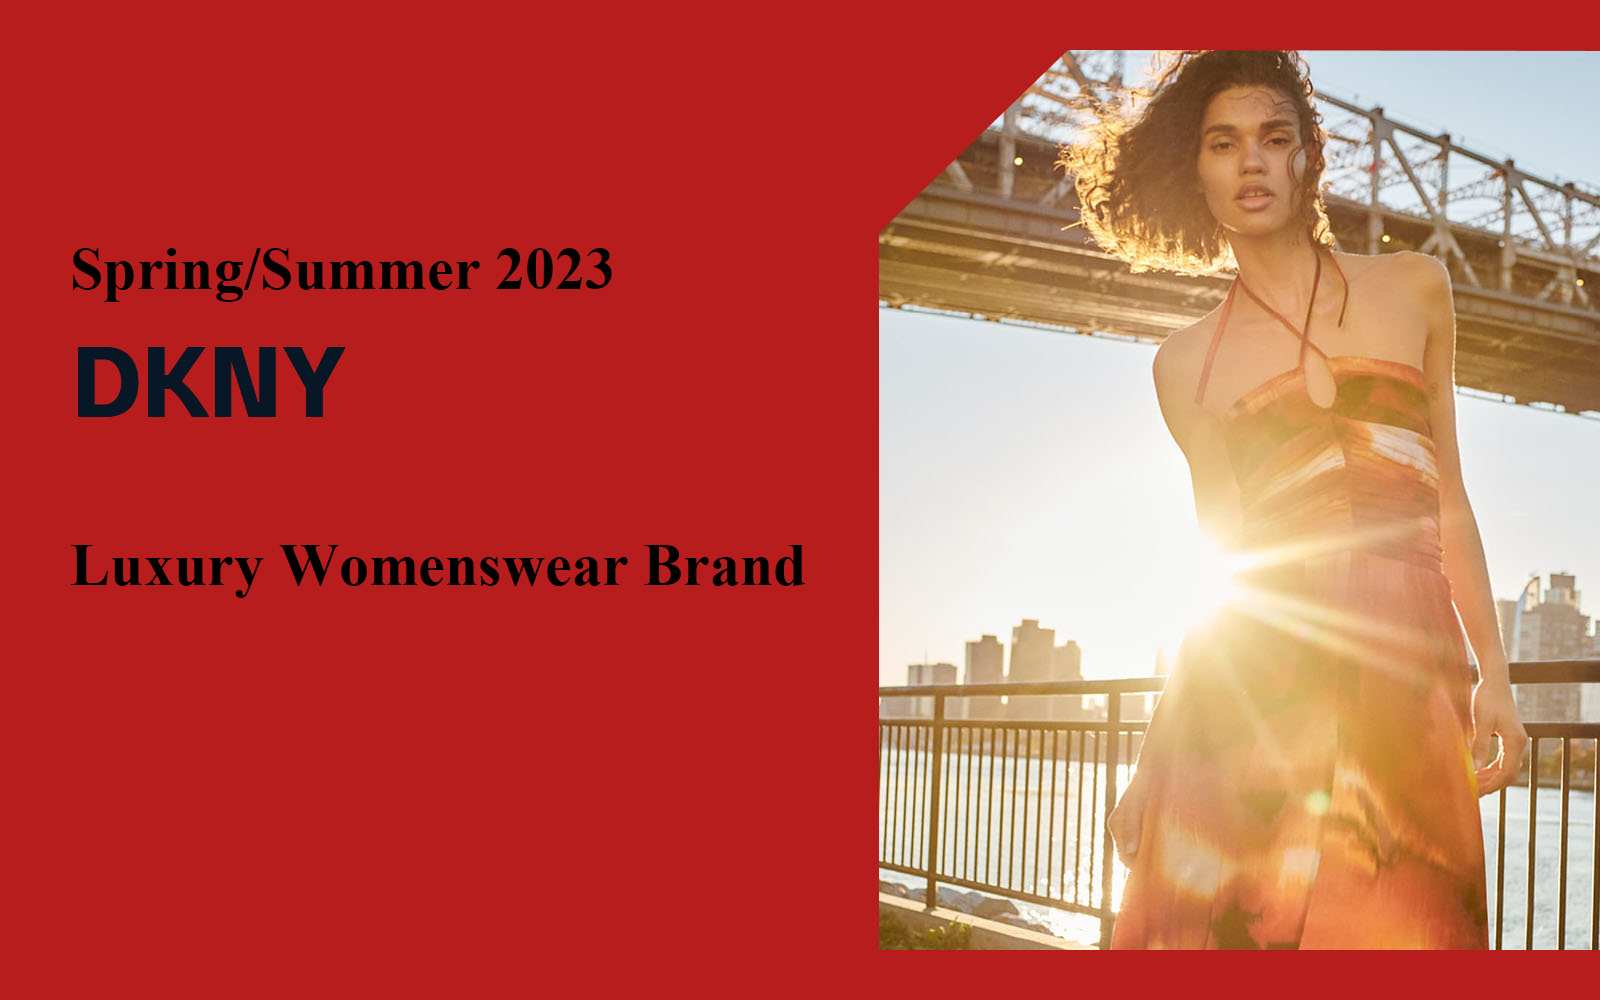 The Analysis of DKNY The Luxury Womenswear Brand